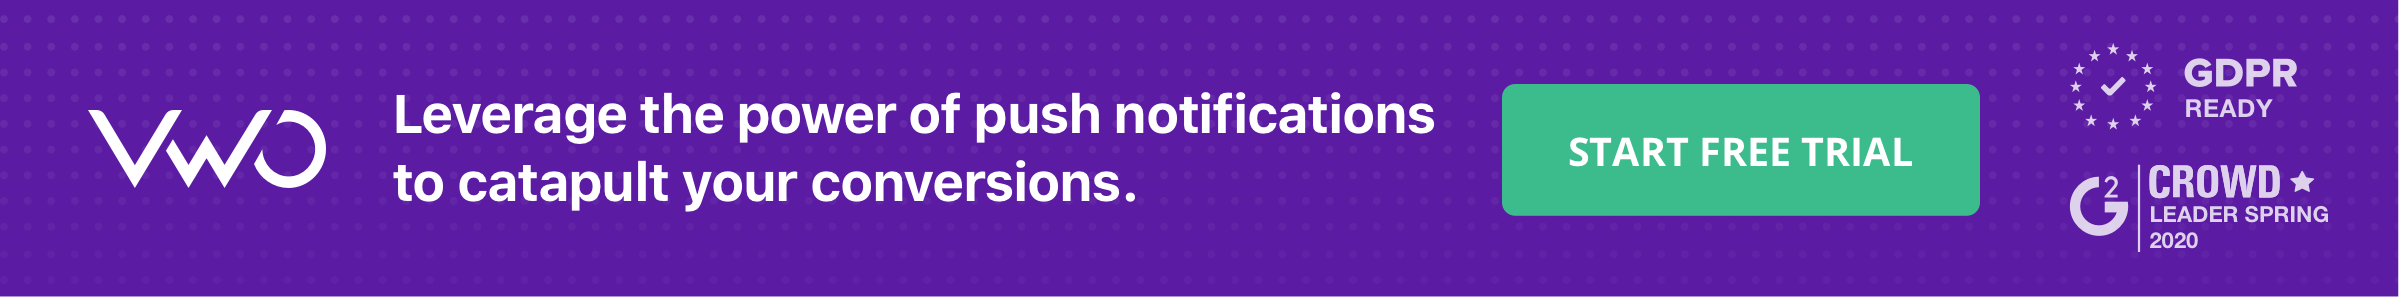 banner Push notifications